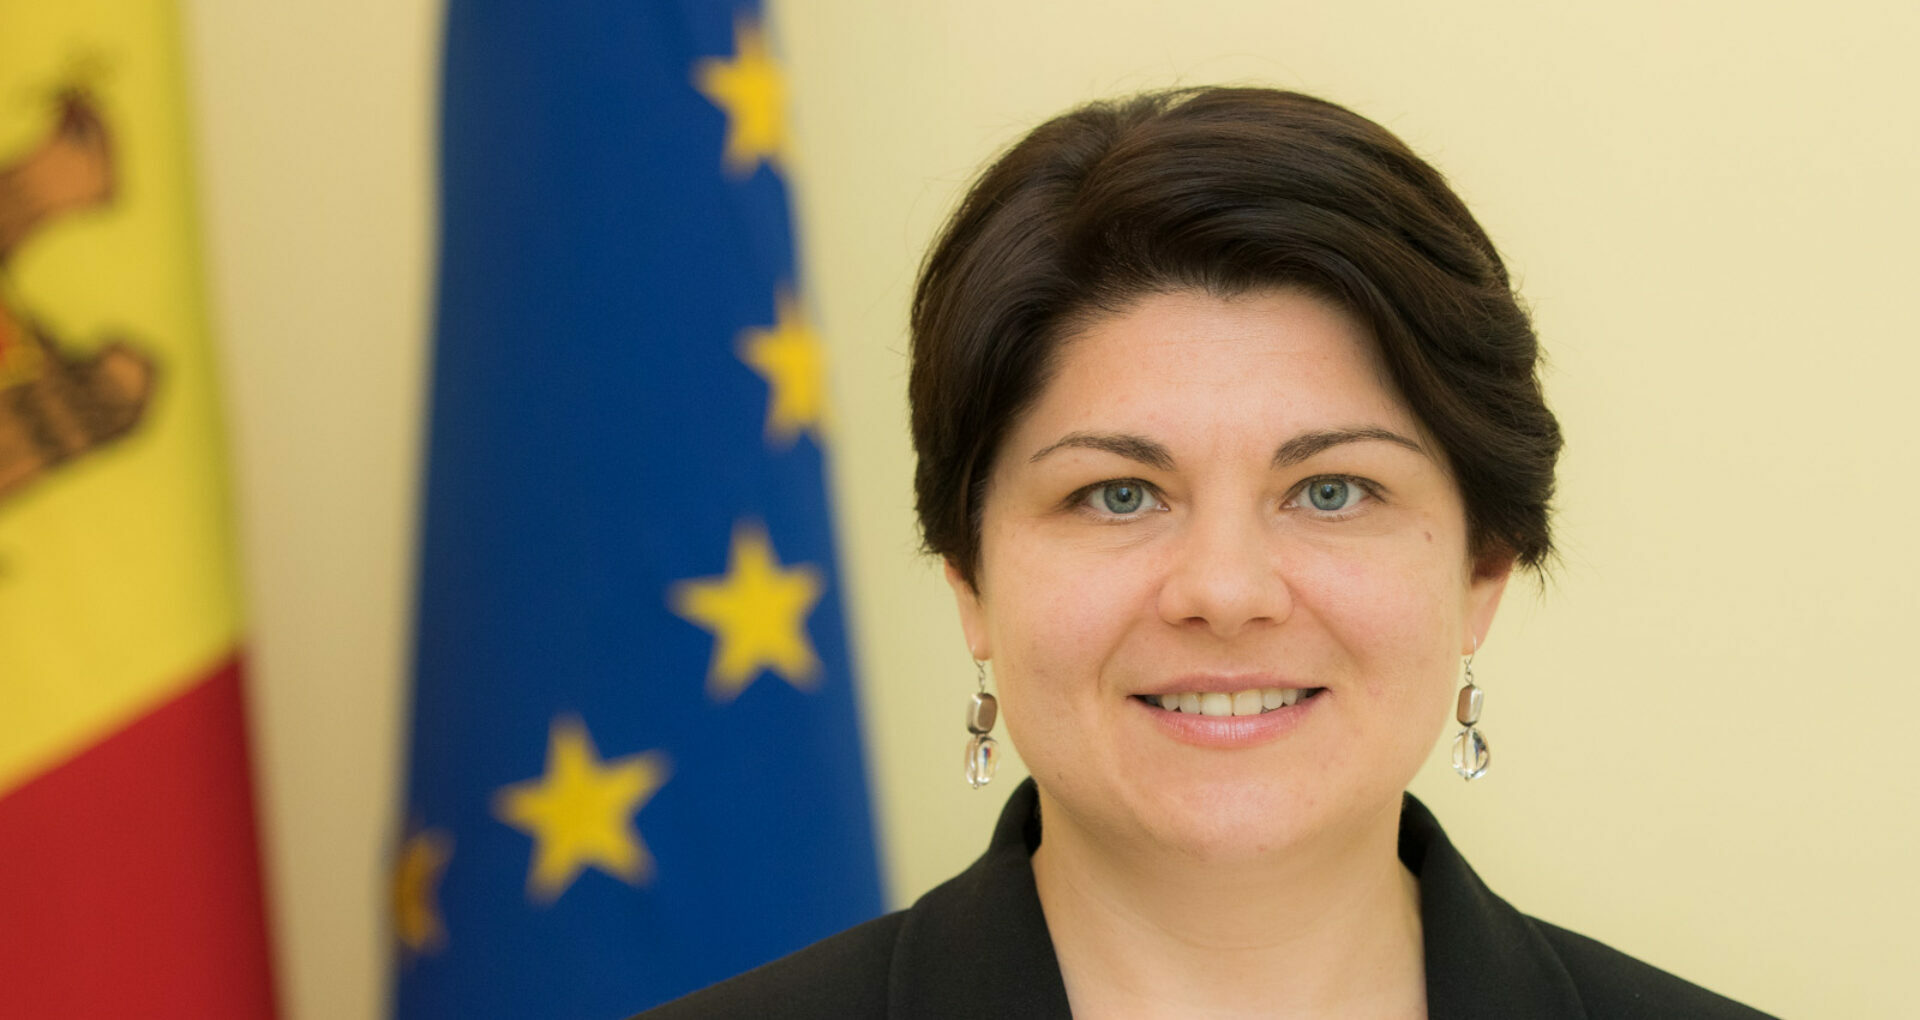 BREAKING NEWS: President Maia Sandu Appointed Natalia Gavrilița to the Prime Minister Position